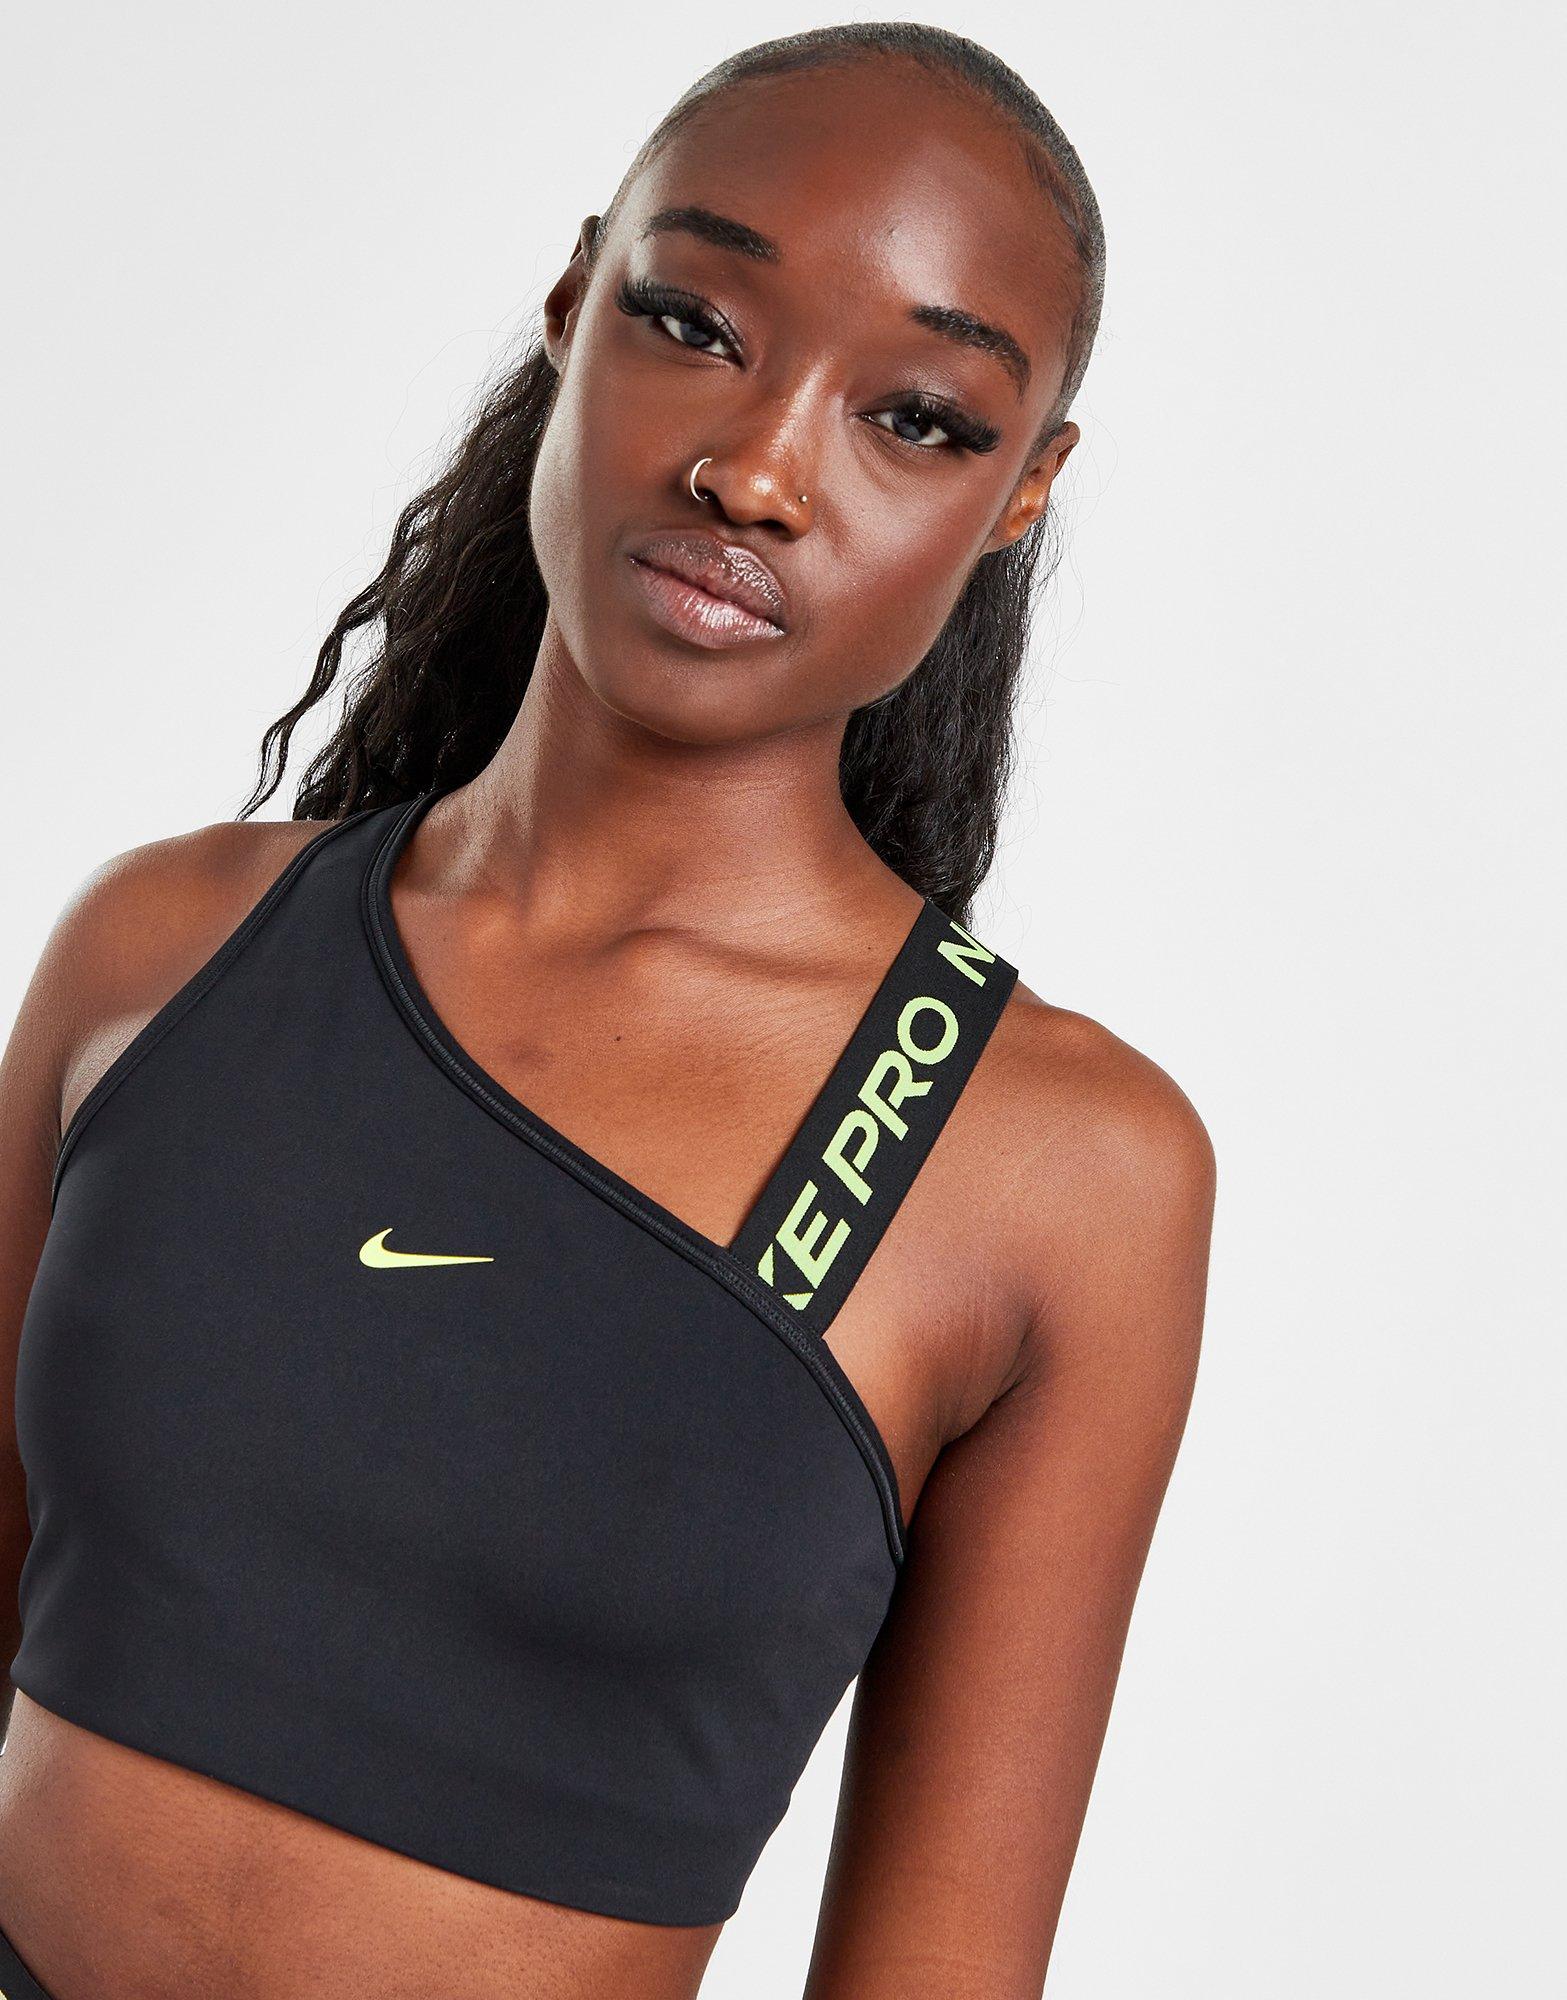 Twenty year dream realized! Black Nike sports bra!! : r/transpositive